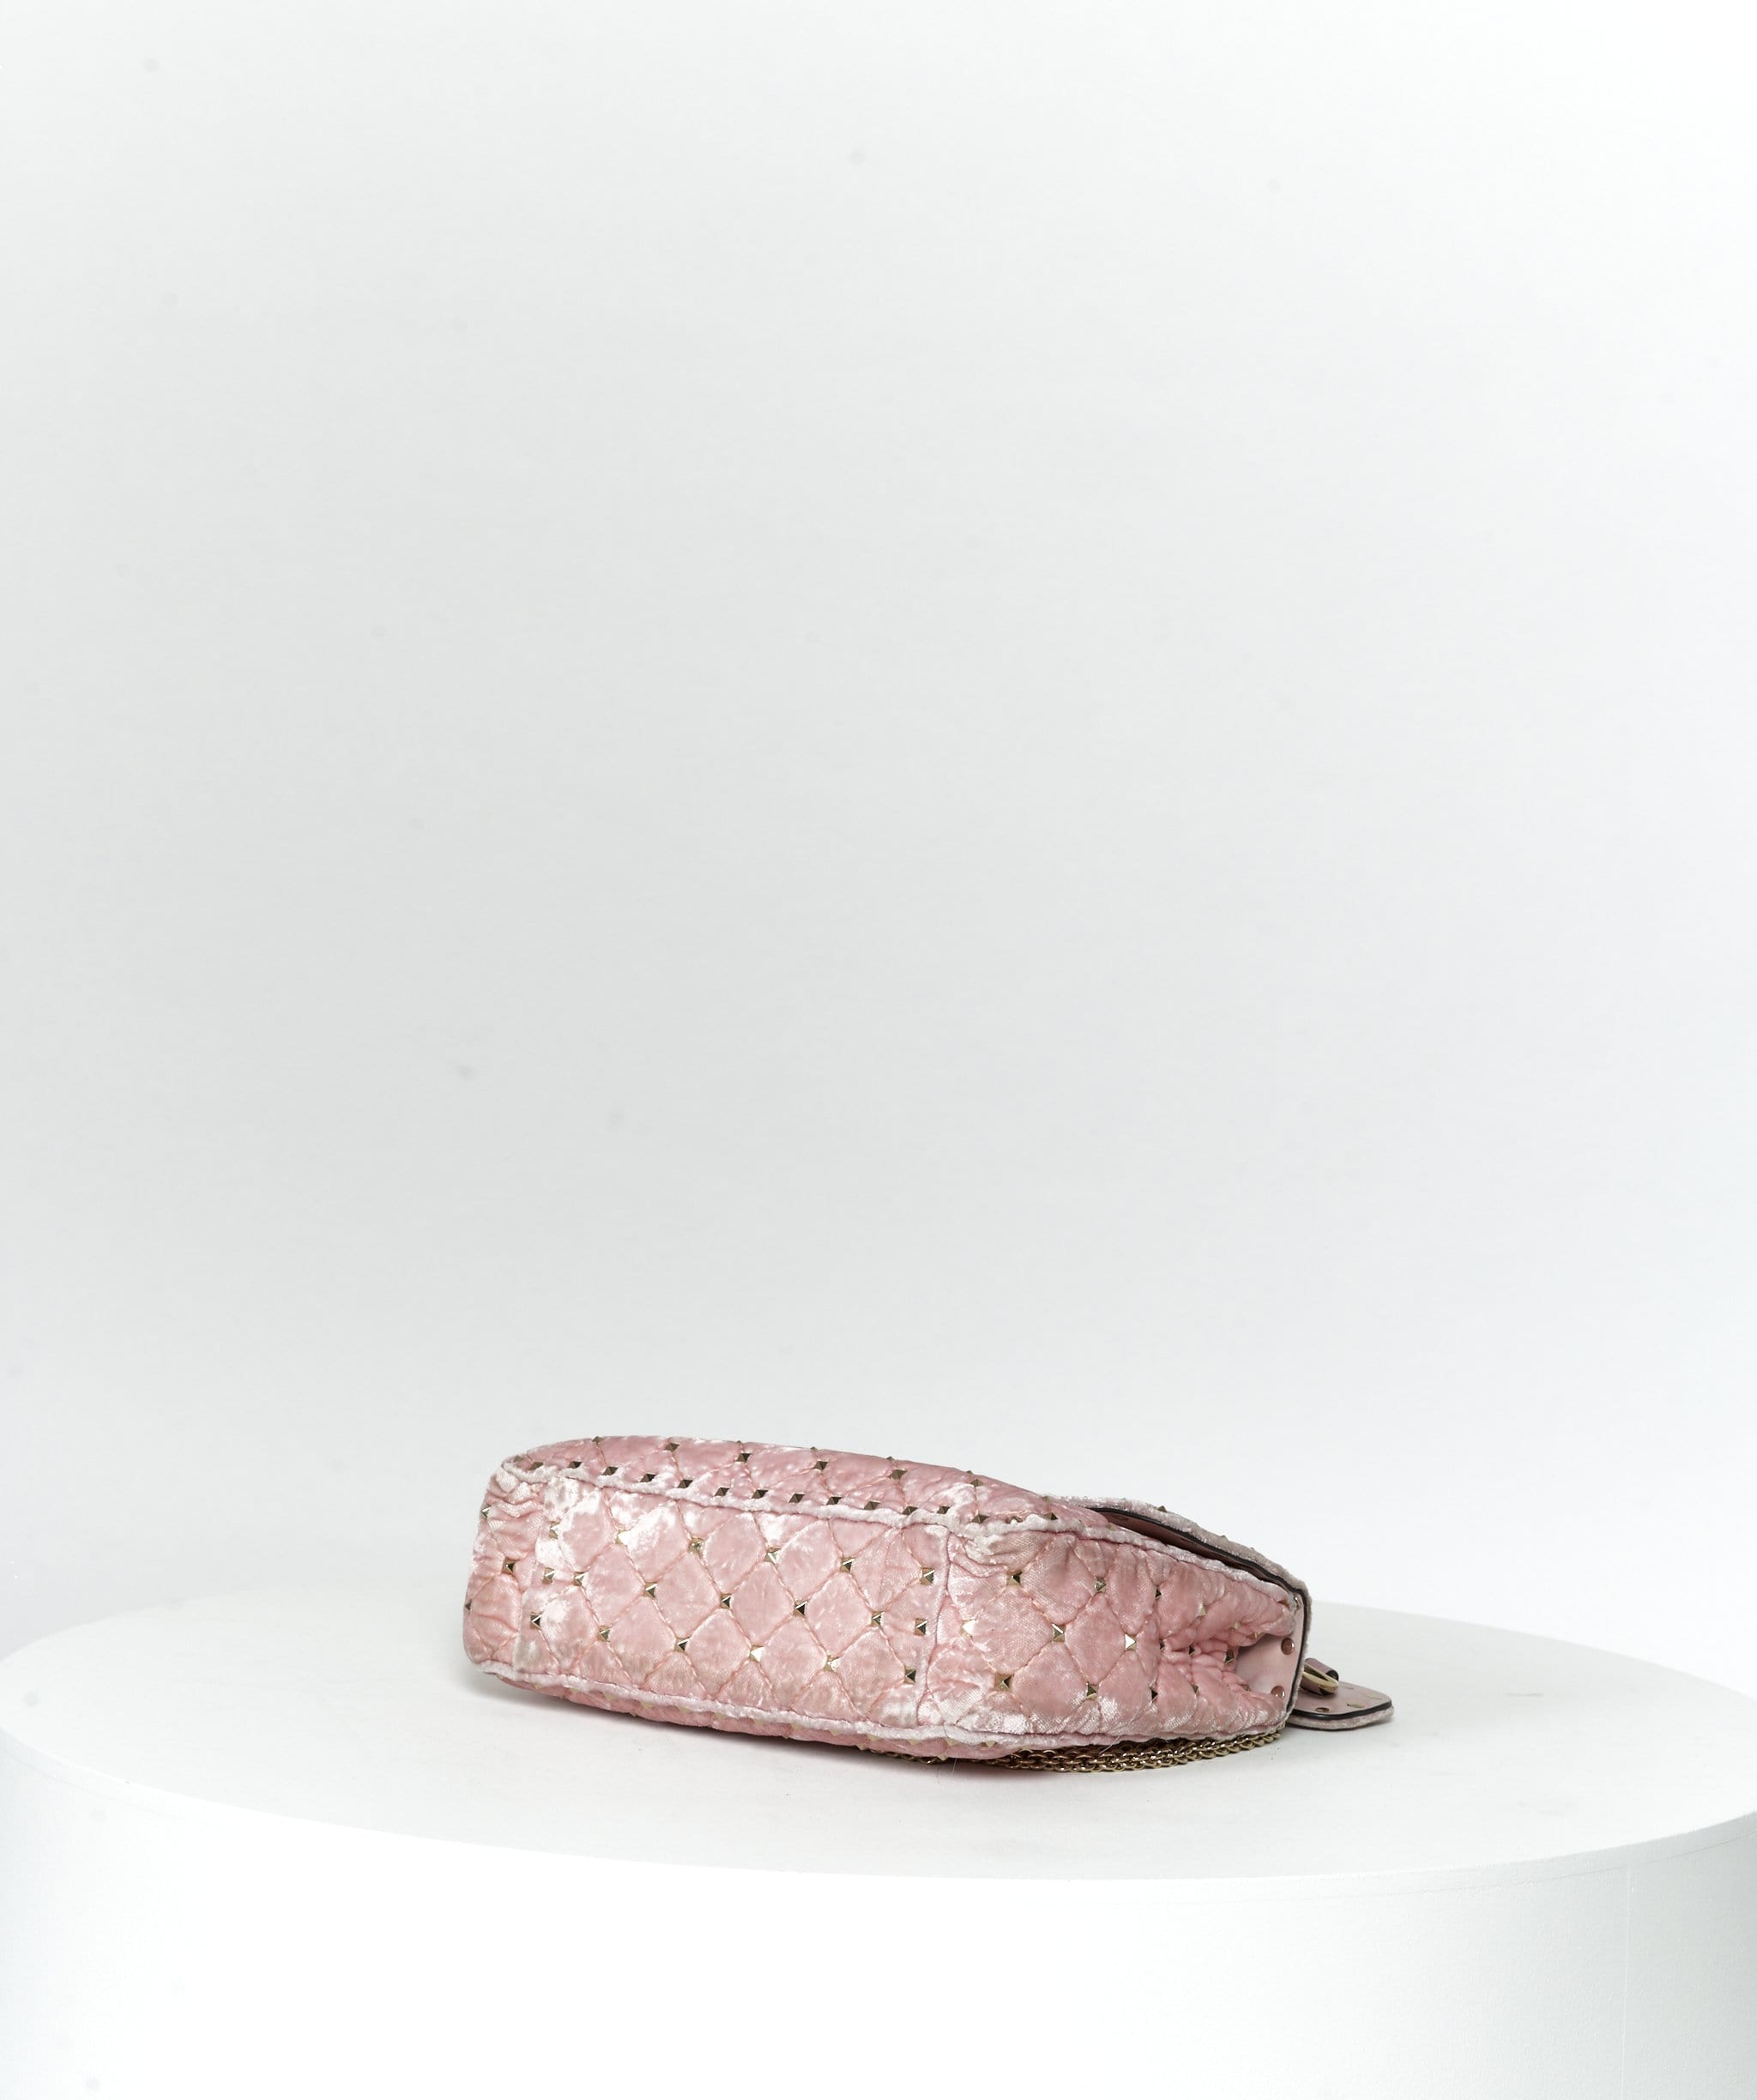 Valentino Valentino pink suede rock stud bag garavani